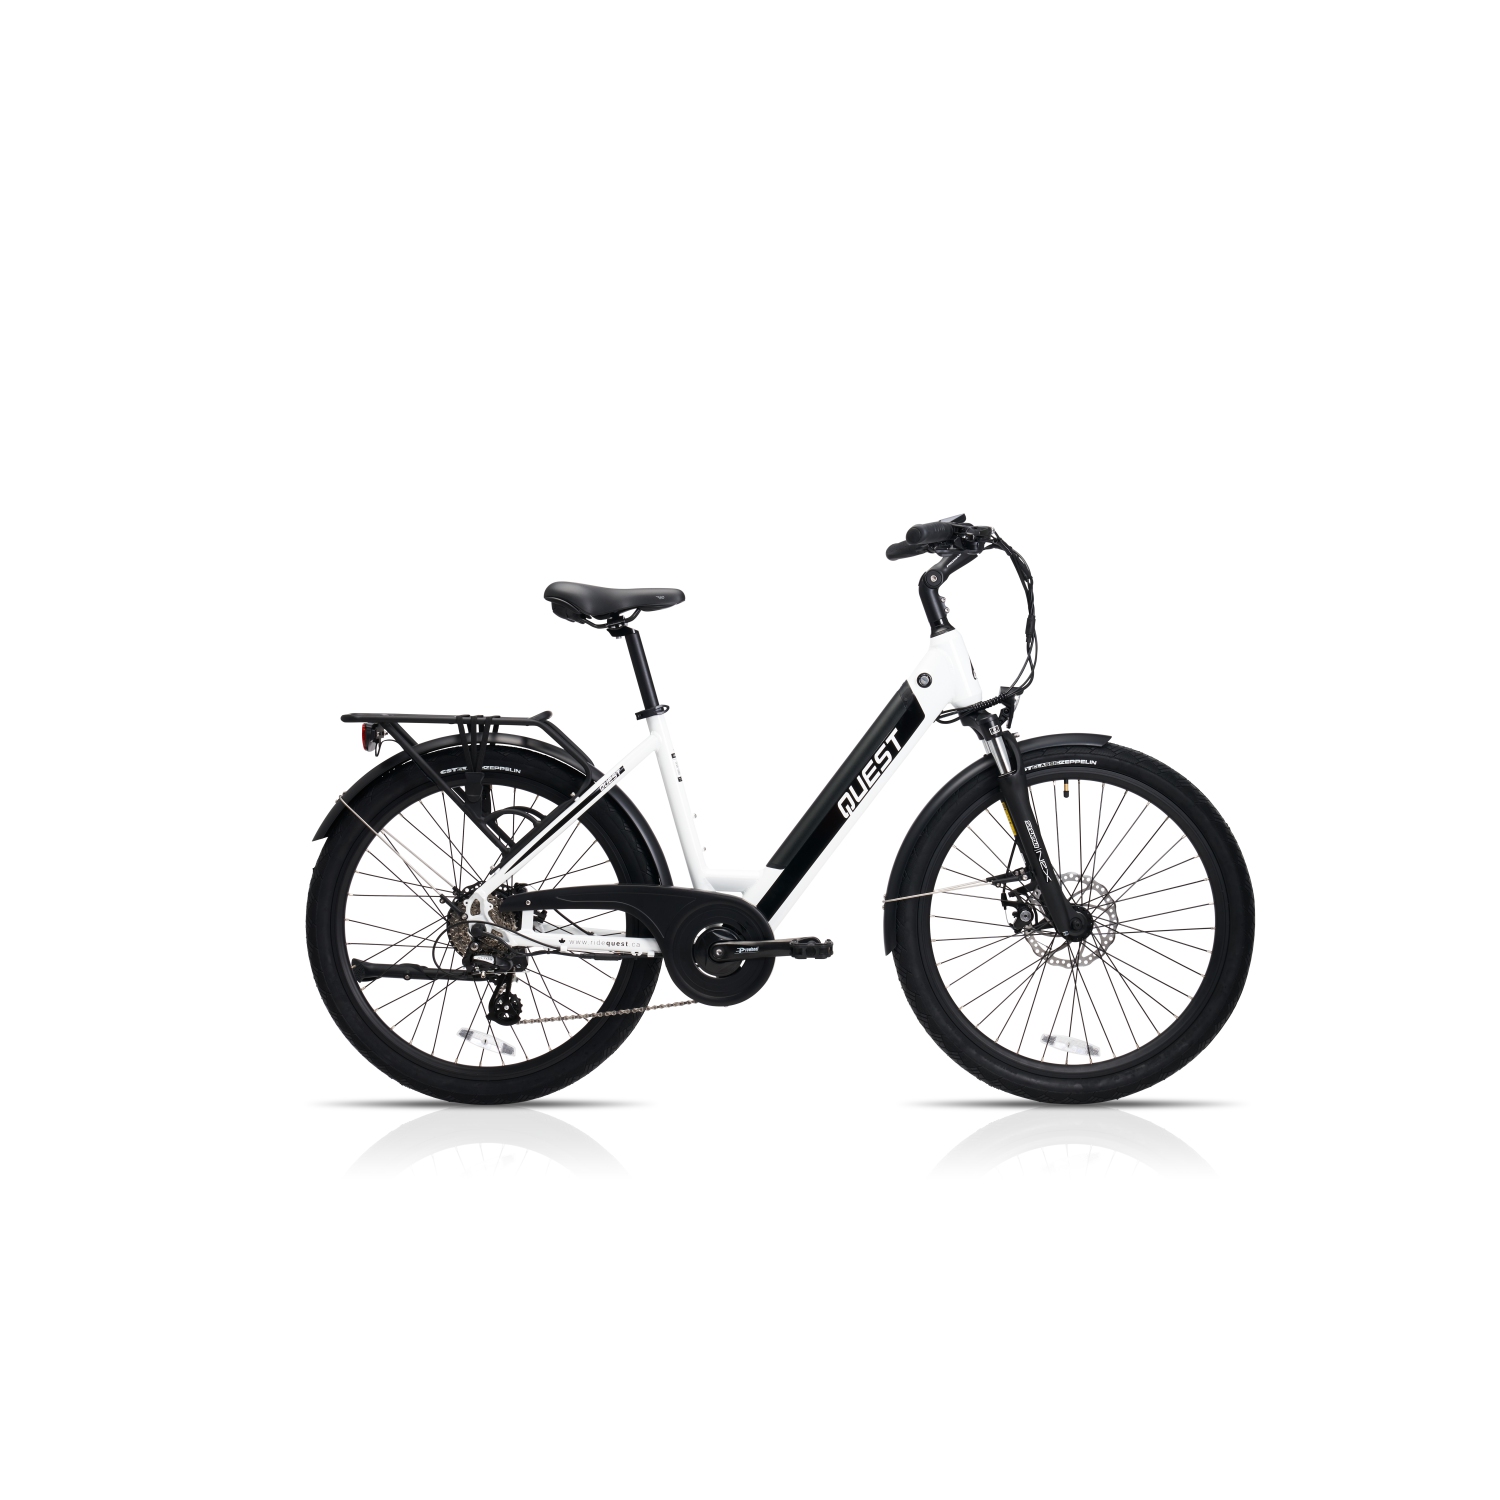 QUEST HUB 26" Urban Electric Bike (350W Motor, 36V/11.6Ah Battery, 8 Speed) – White/Black